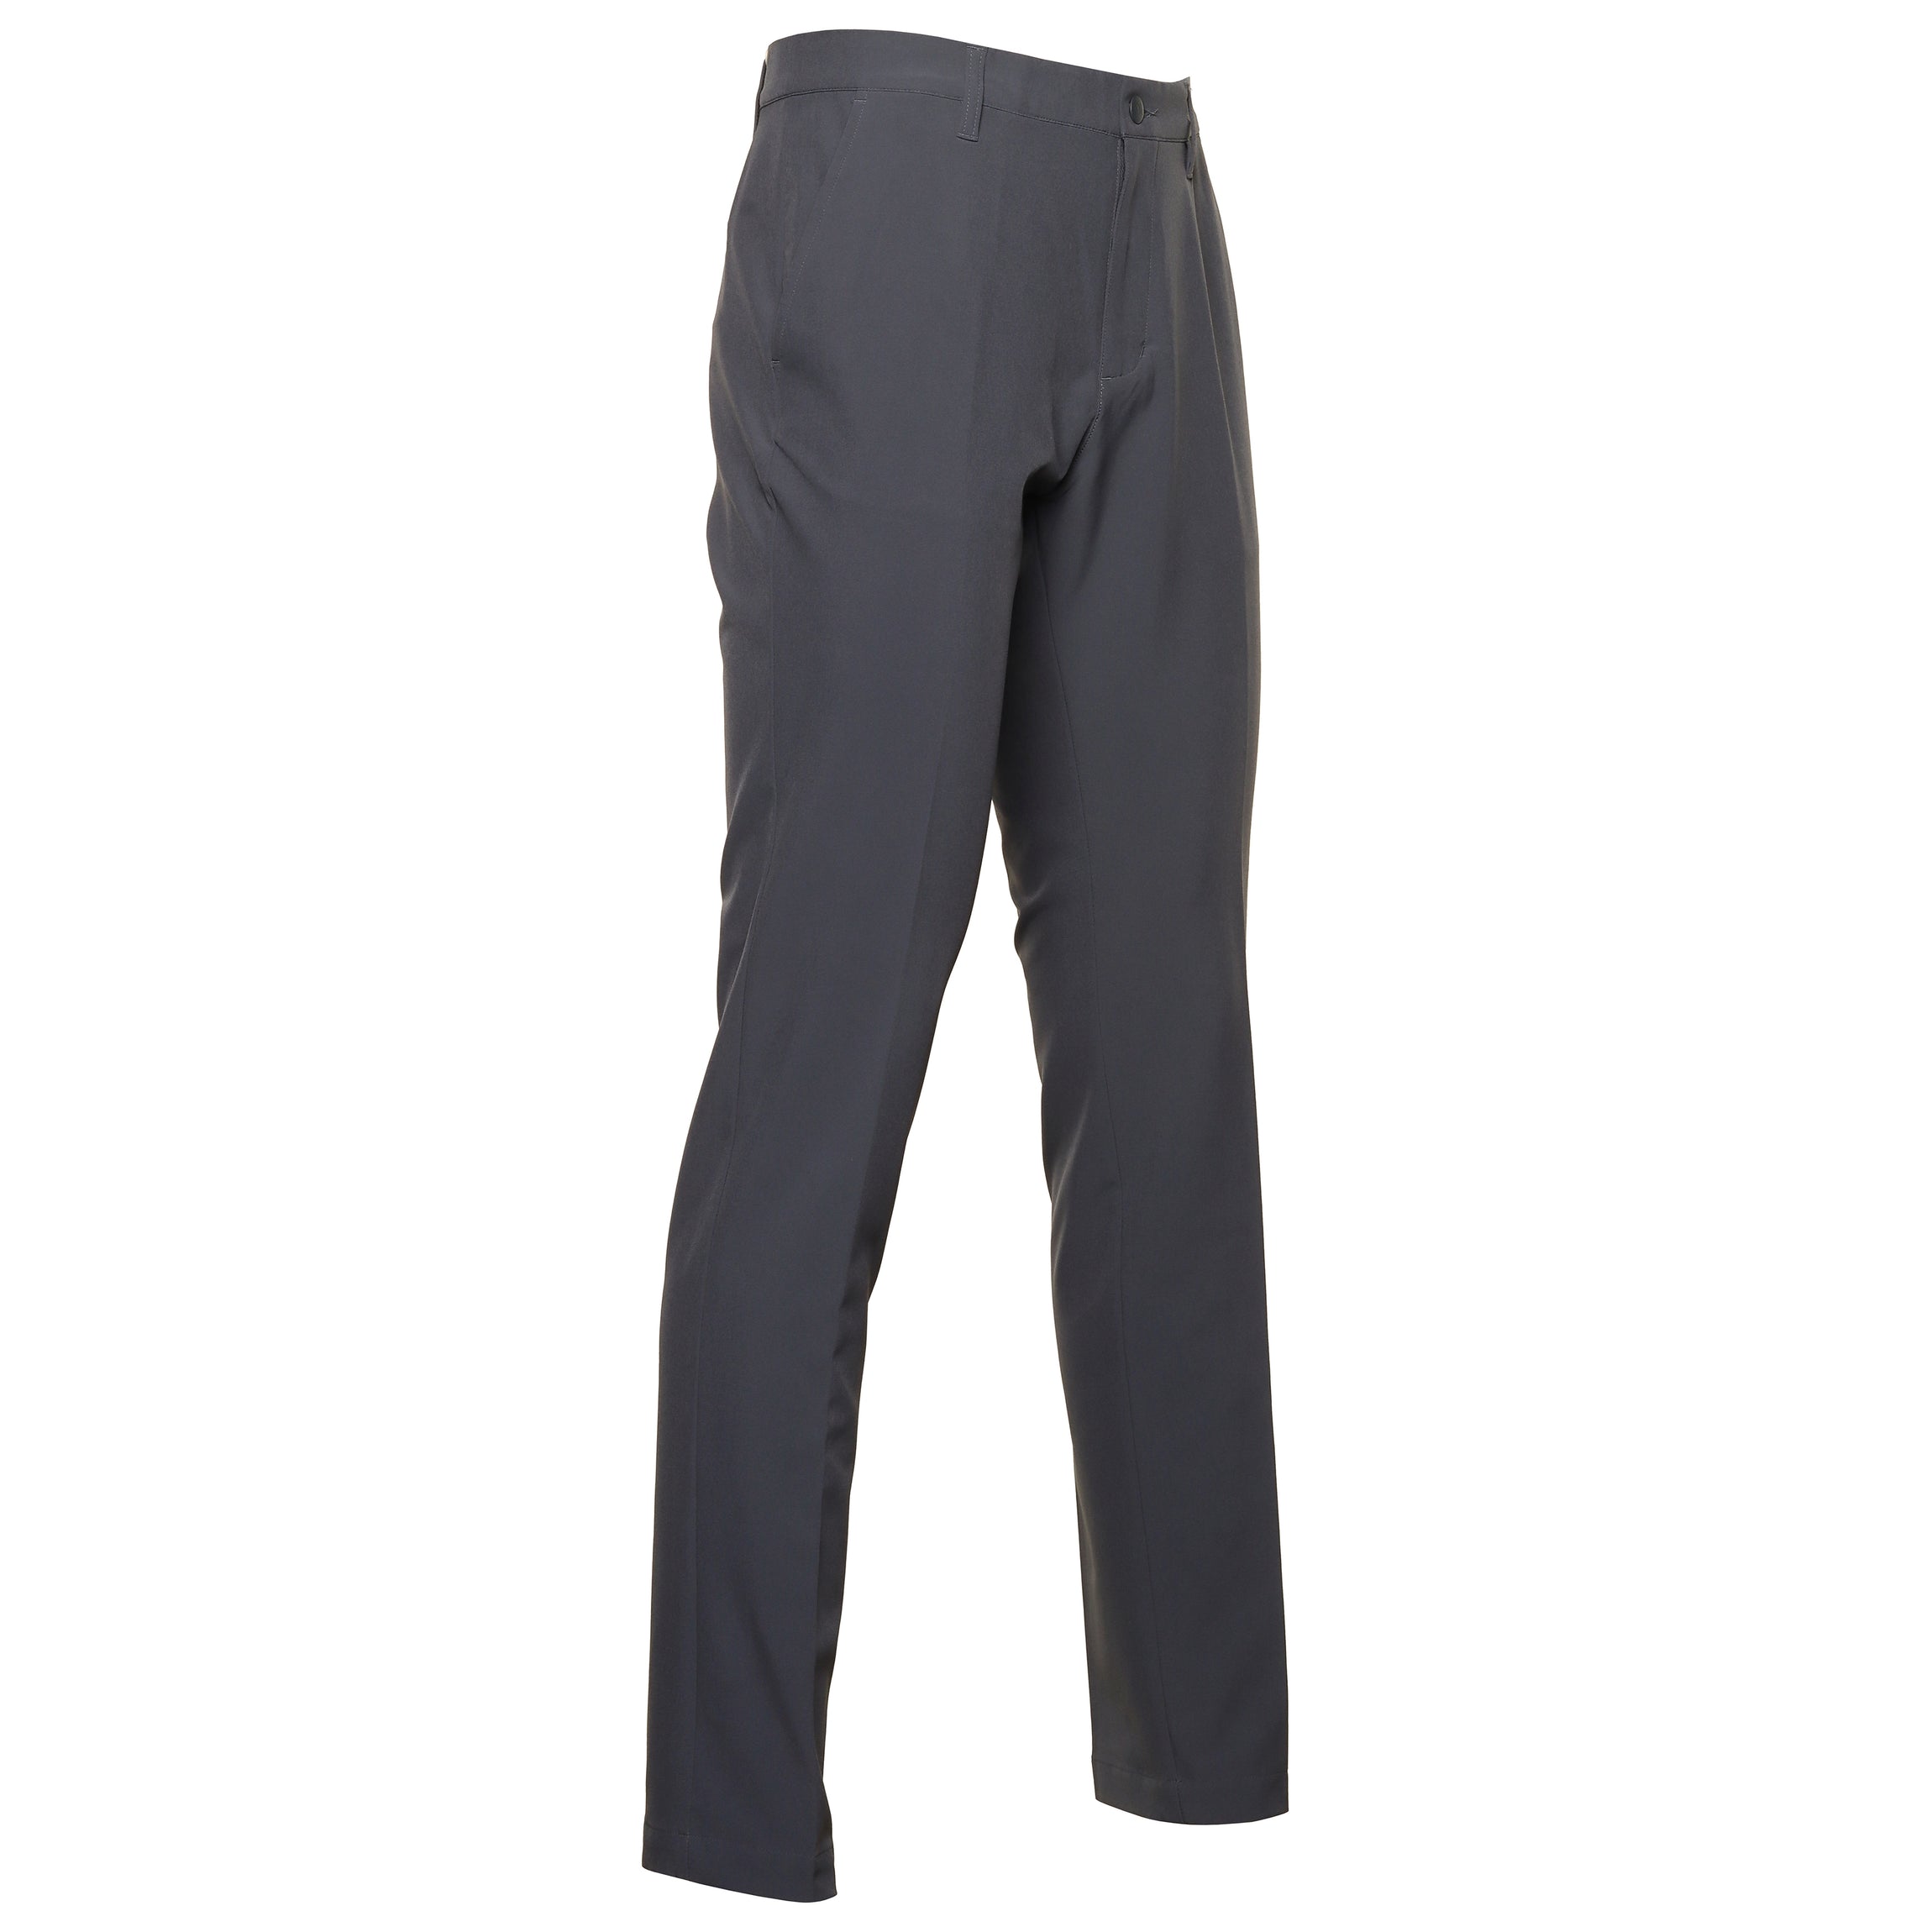 Adidas Ultimate365 Classic Pants - Grey